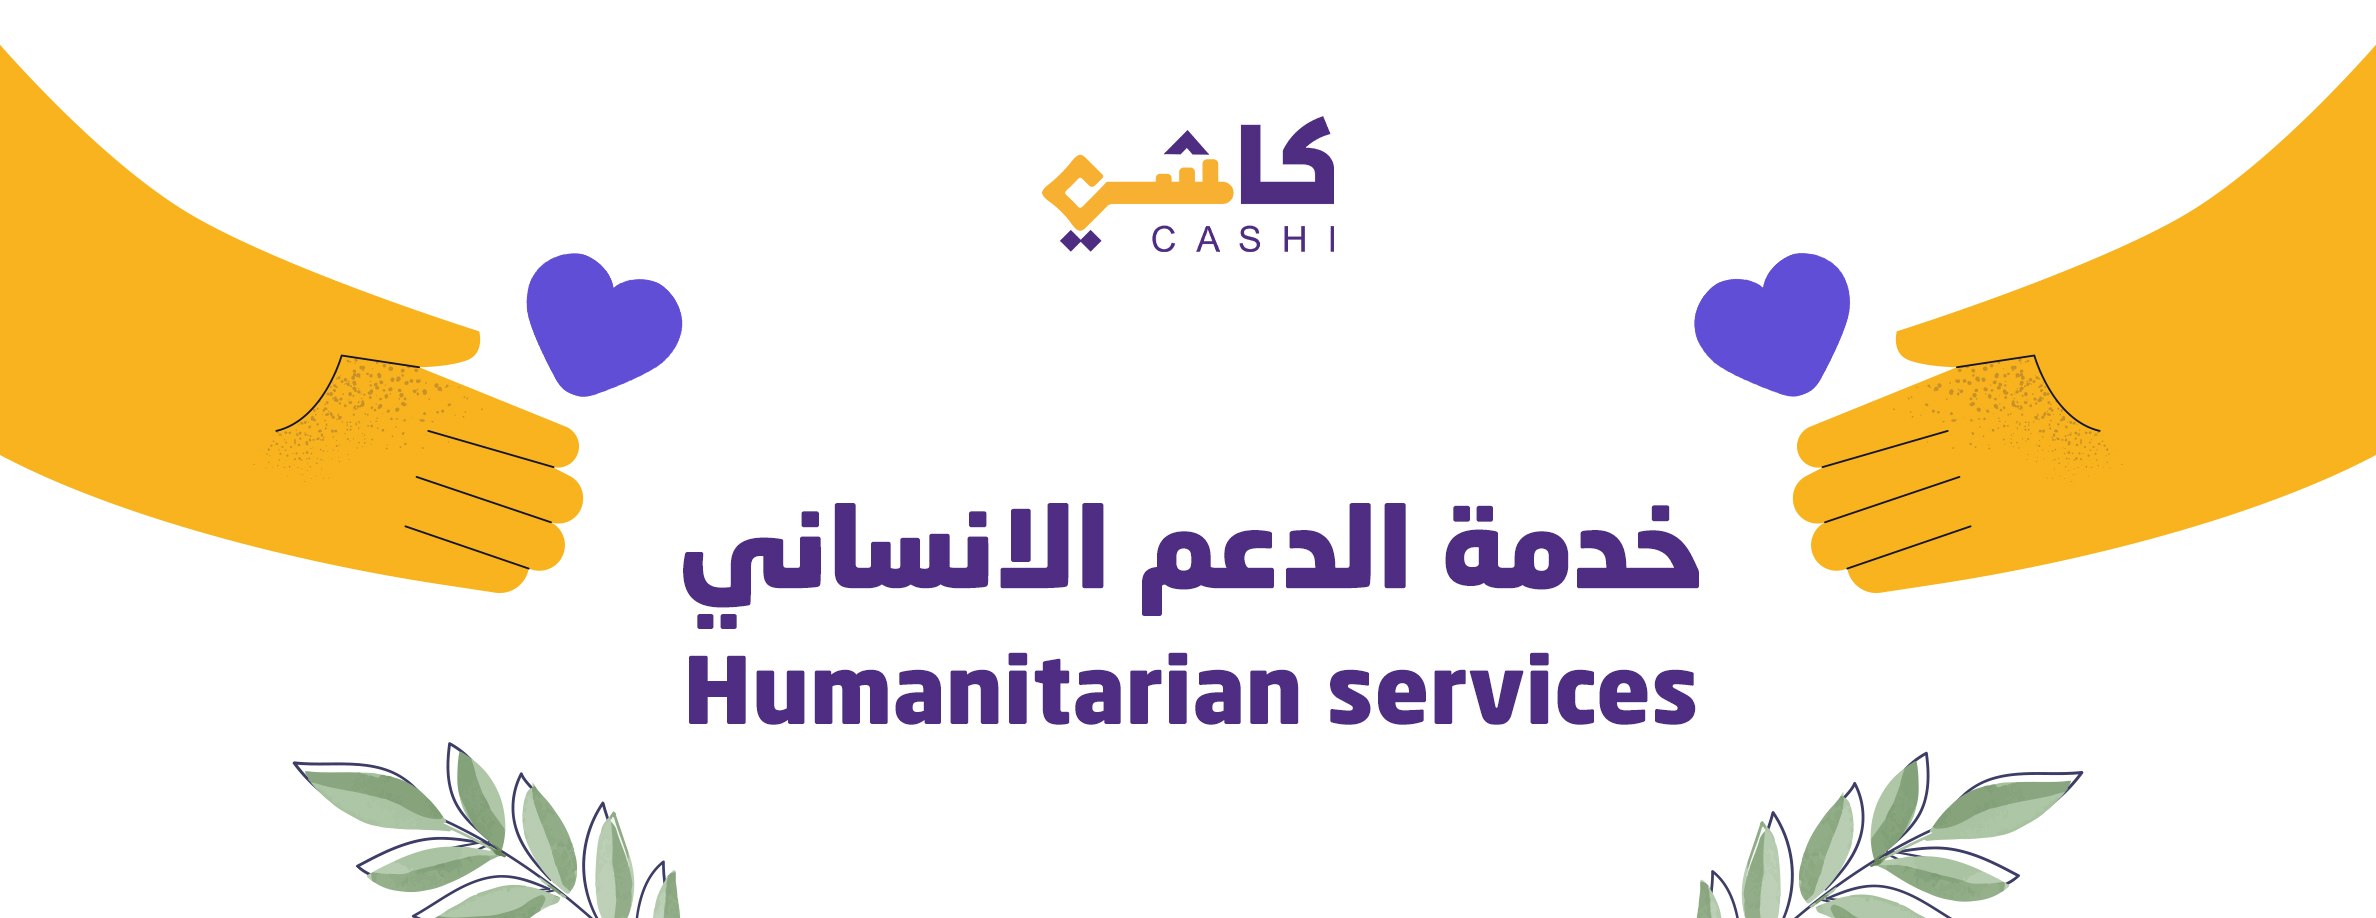 Cashi humanitarian support service